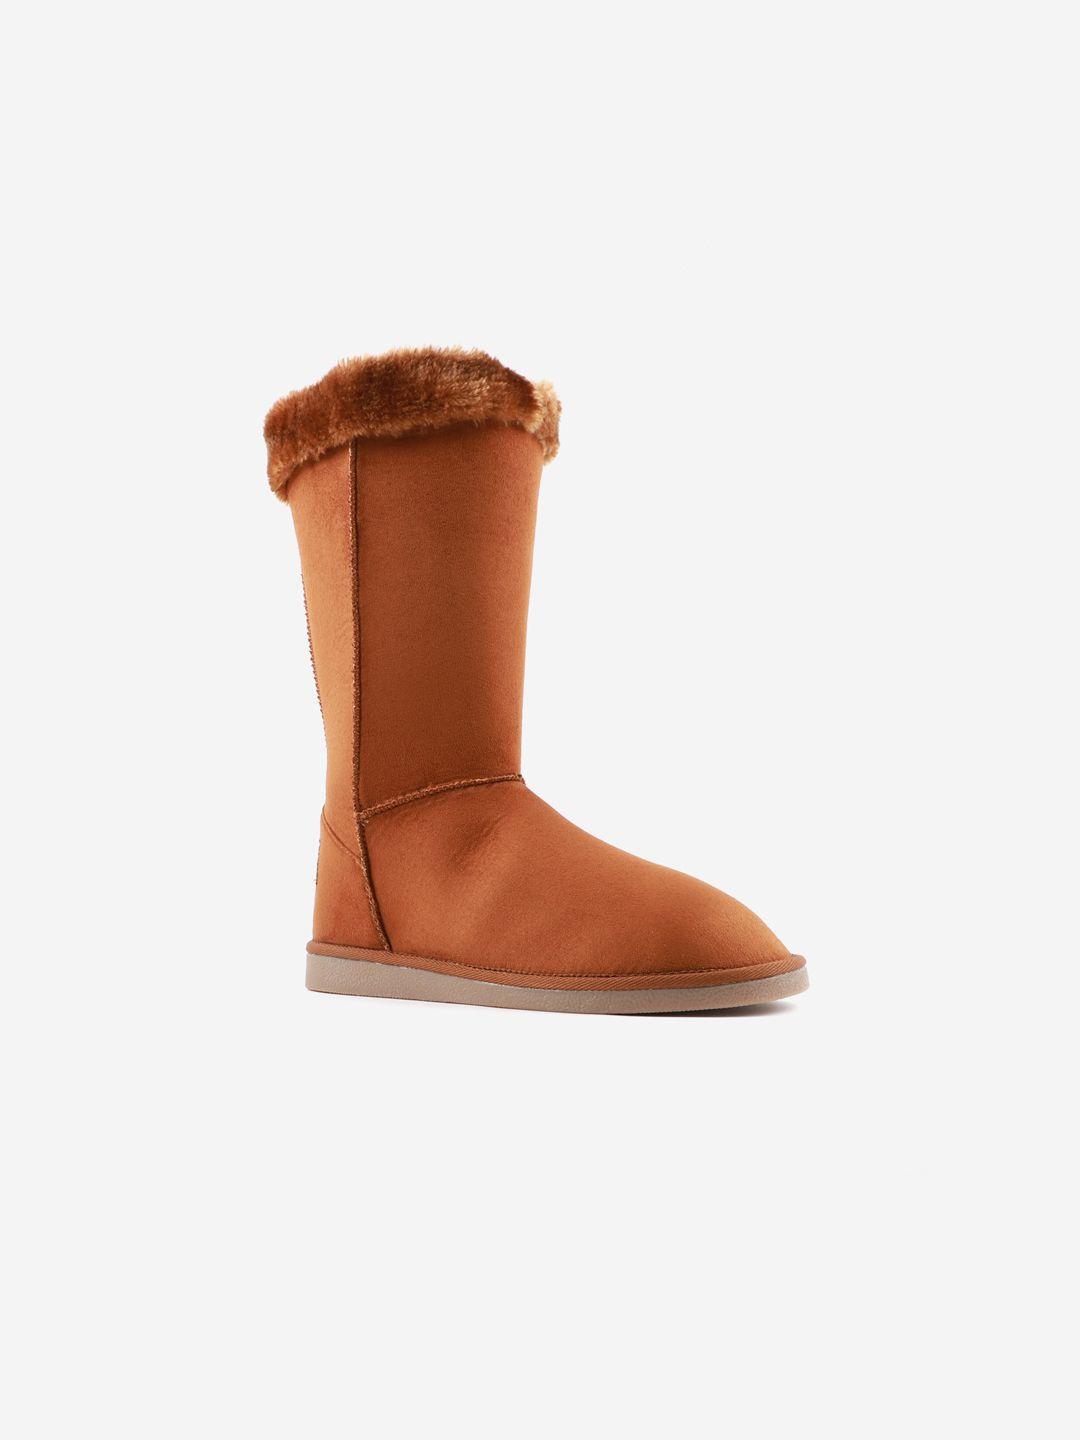 carlton-london-women-tan-high-top-flat-boots